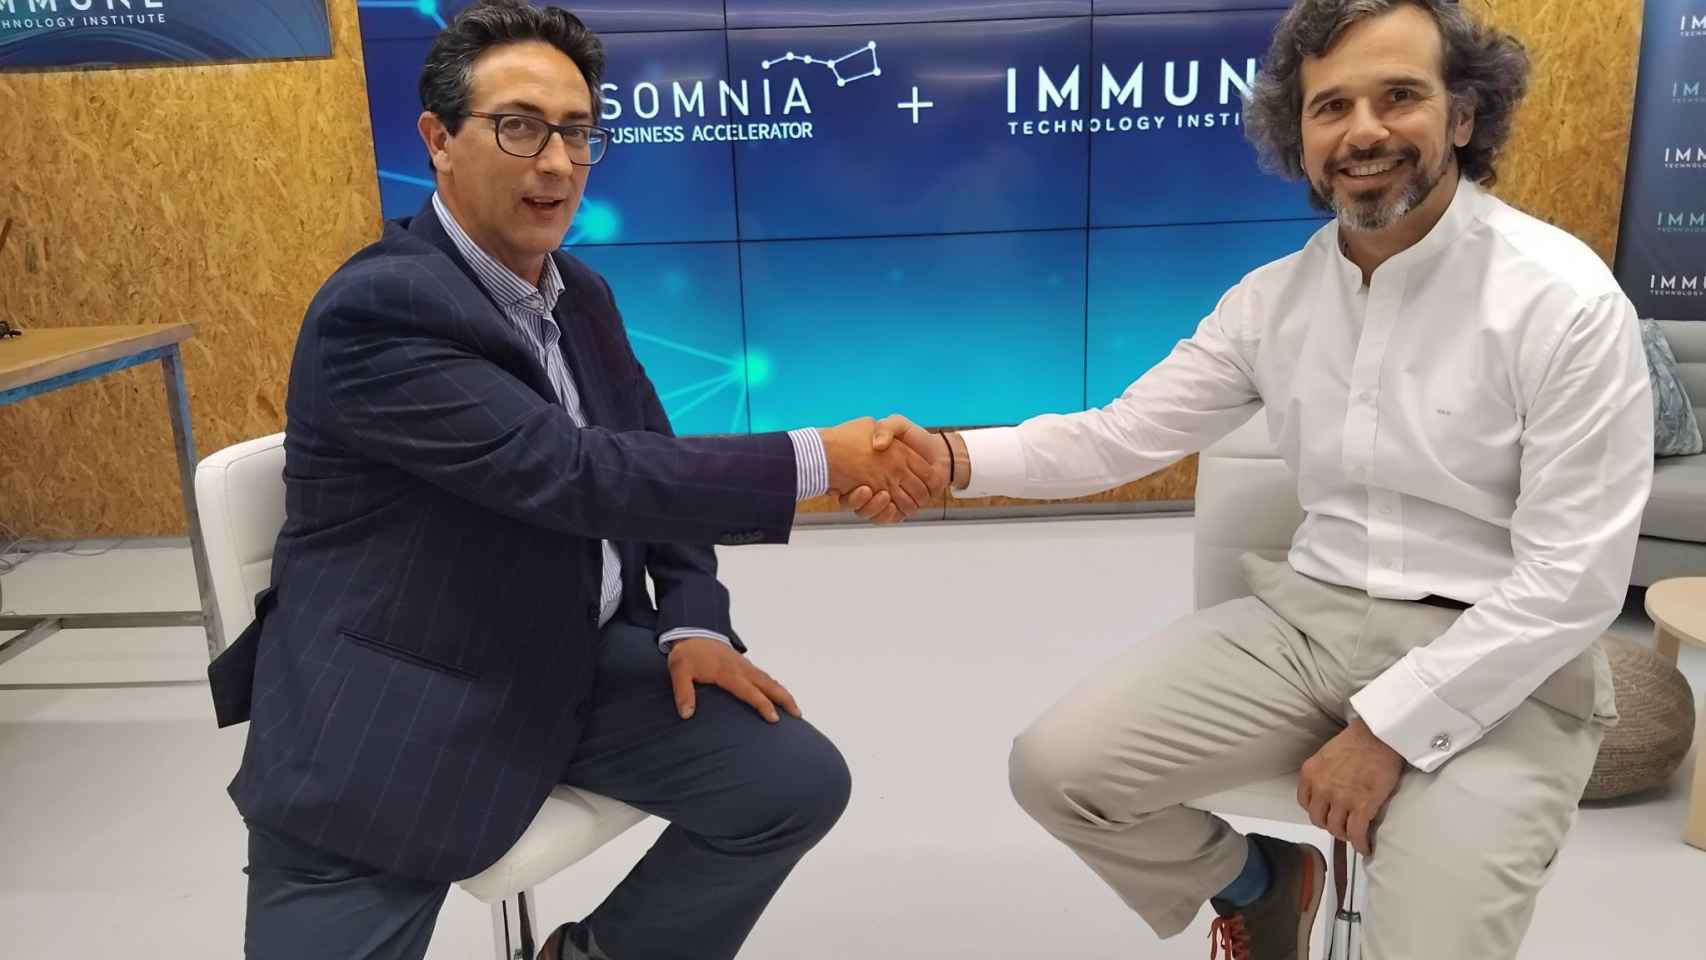 Rafa Navarro, fundador de Innsomnia, y Juan Riva, CEO & Fundador de IMMUNE Technology Institute.